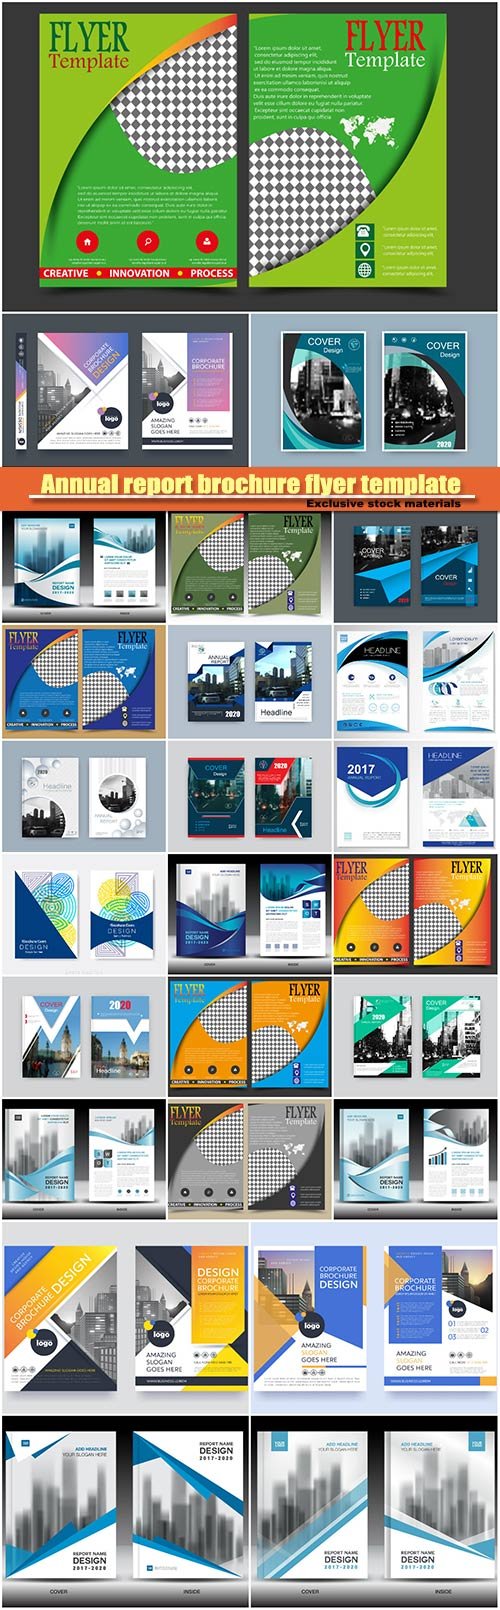 Annual report brochure flyer template, cover design, business company profile